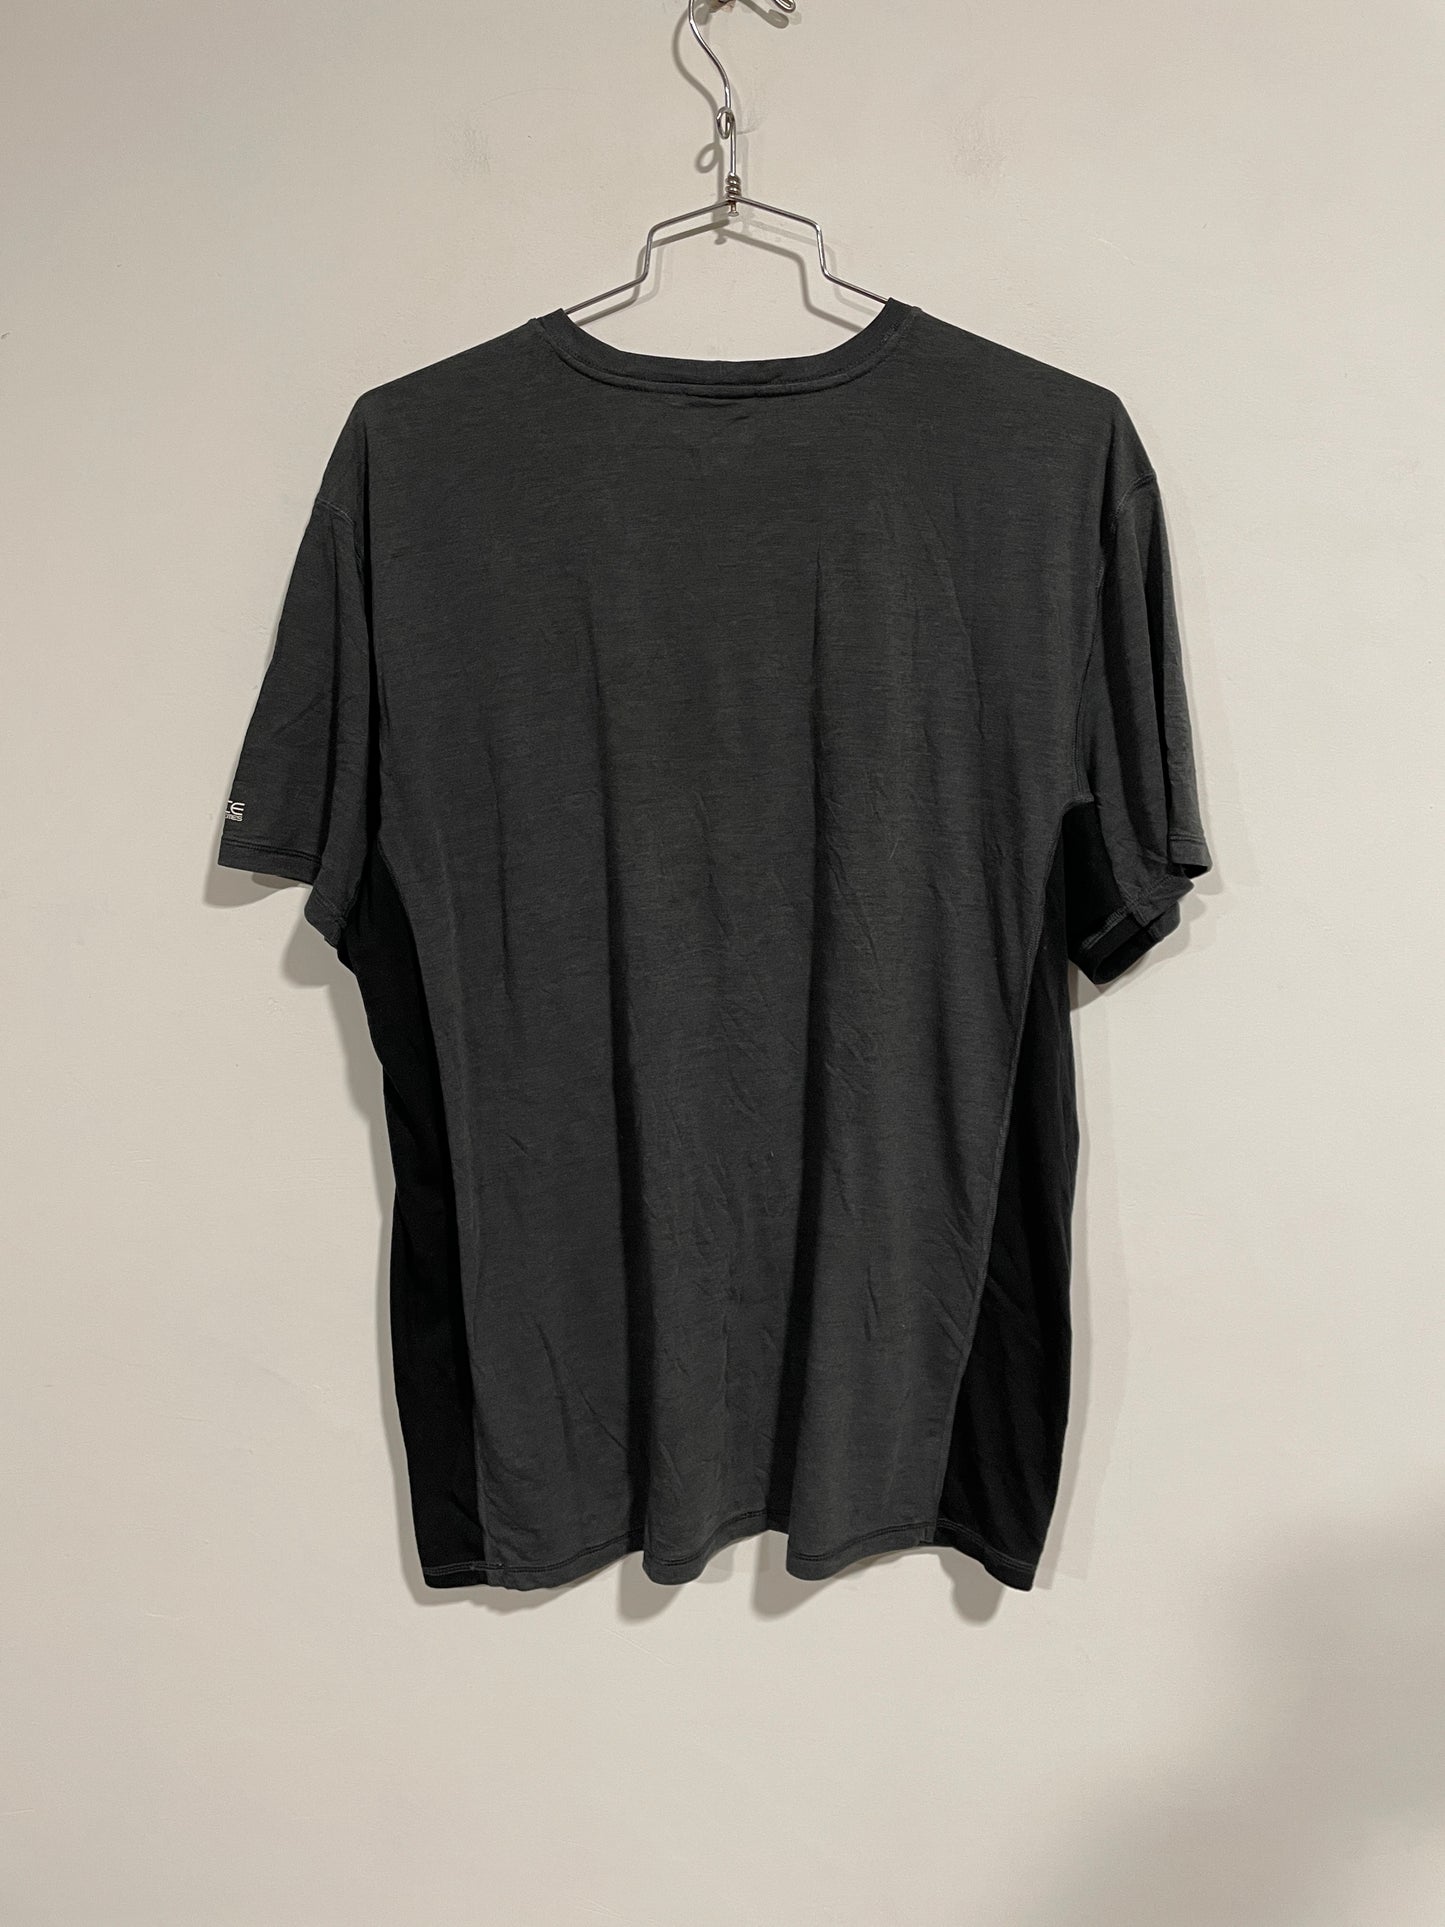 T shirt Carhartt workwear (B780)